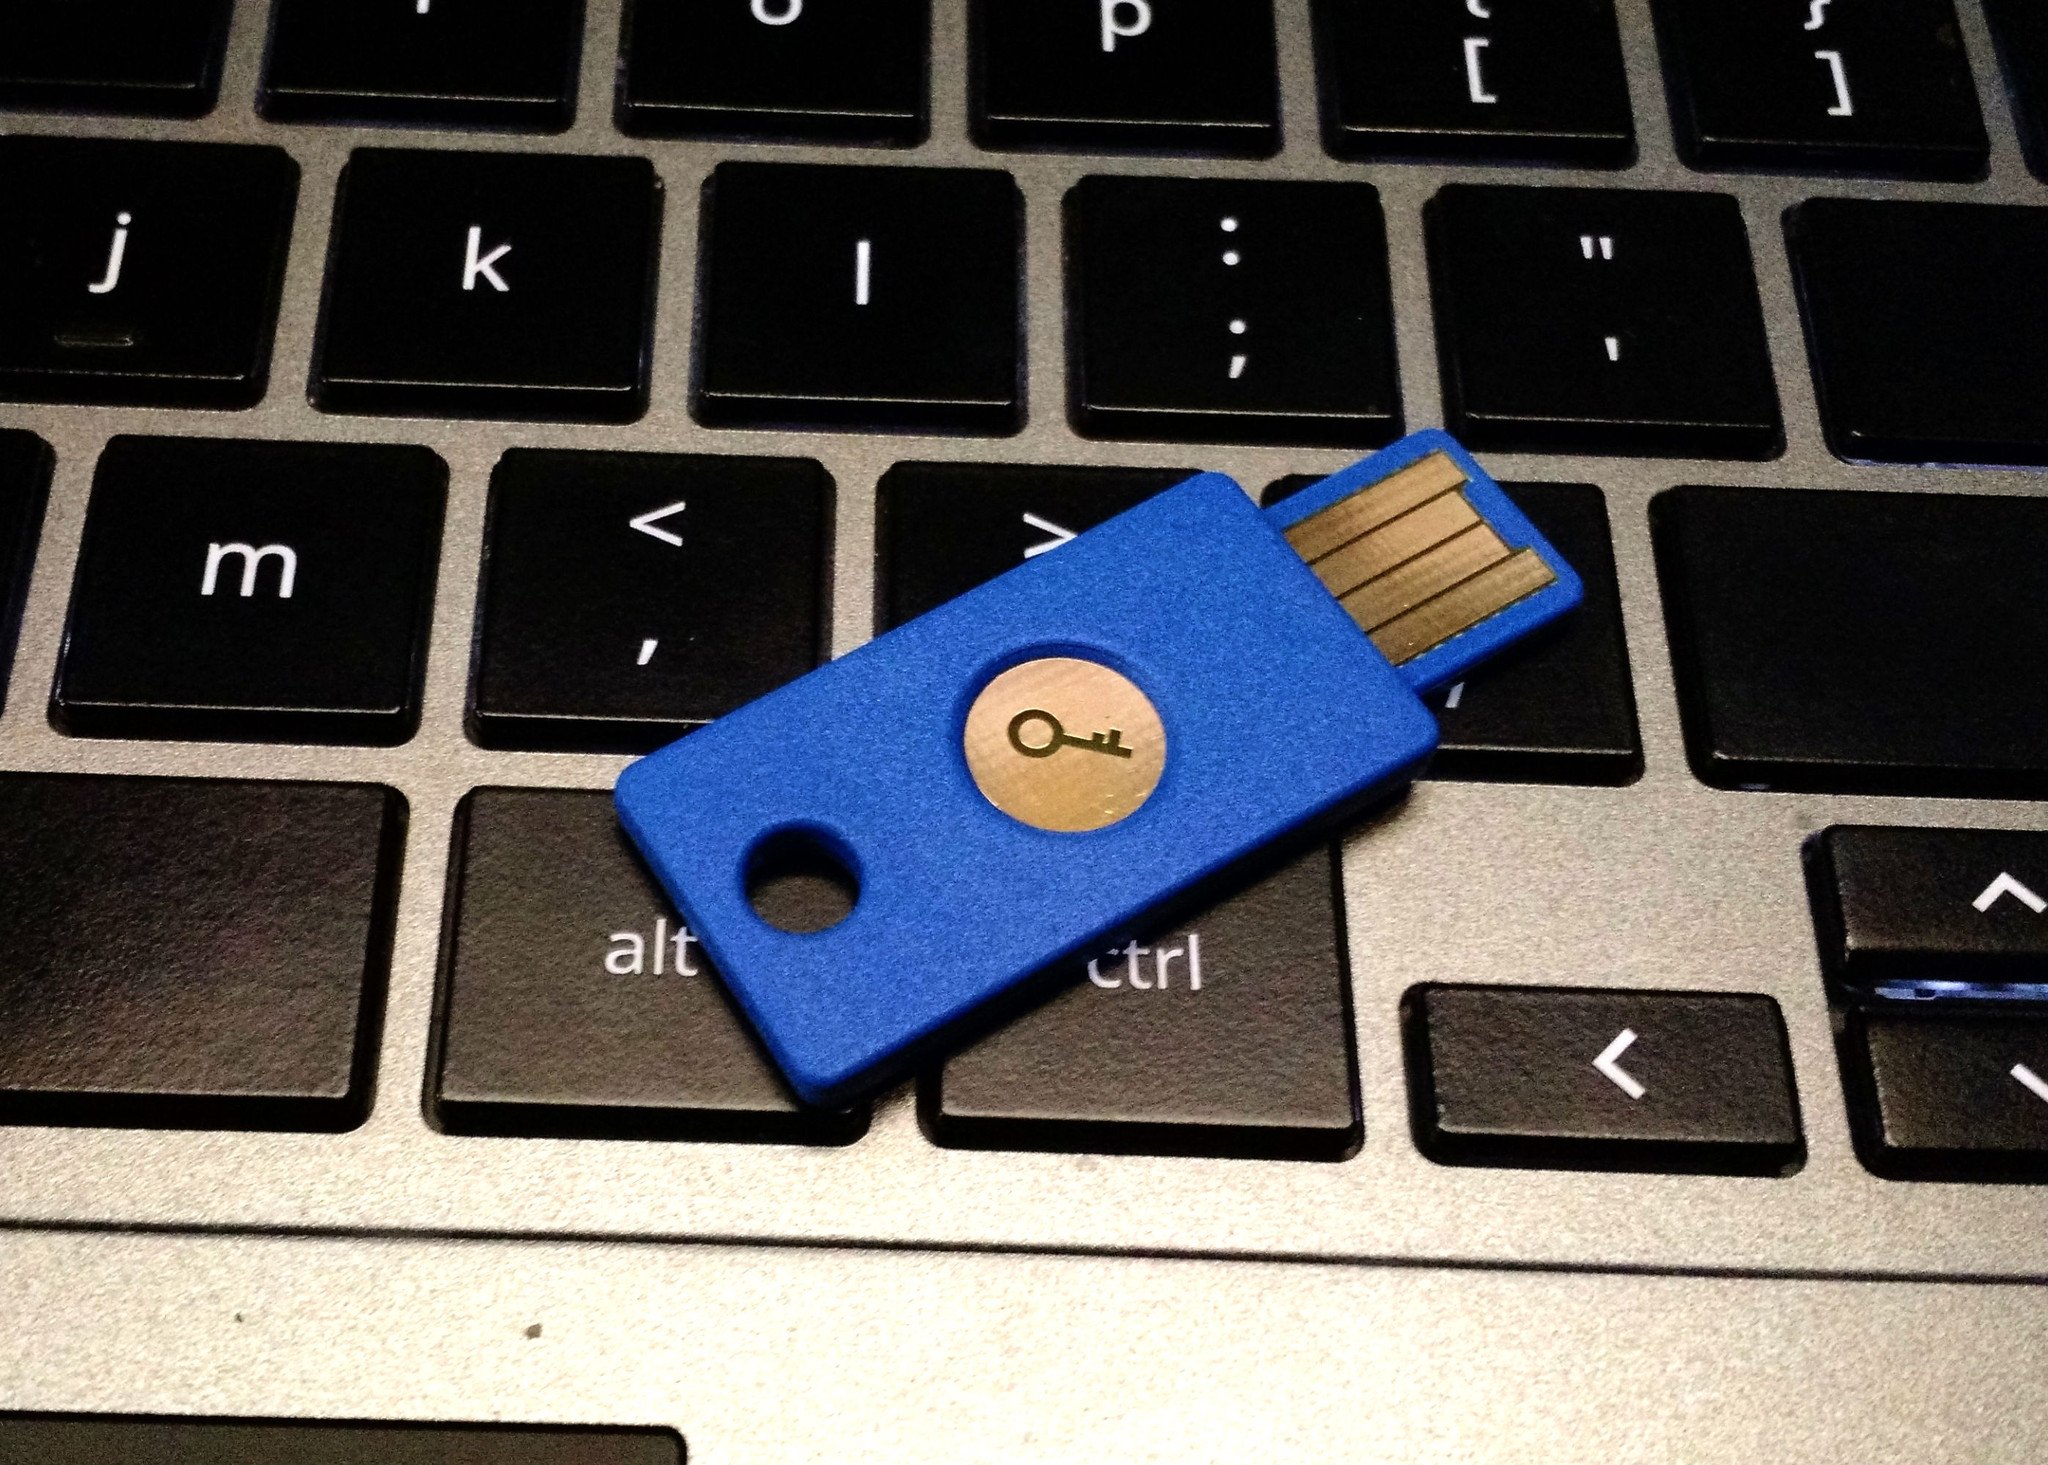 Pretty blue key to a pretty sweet account